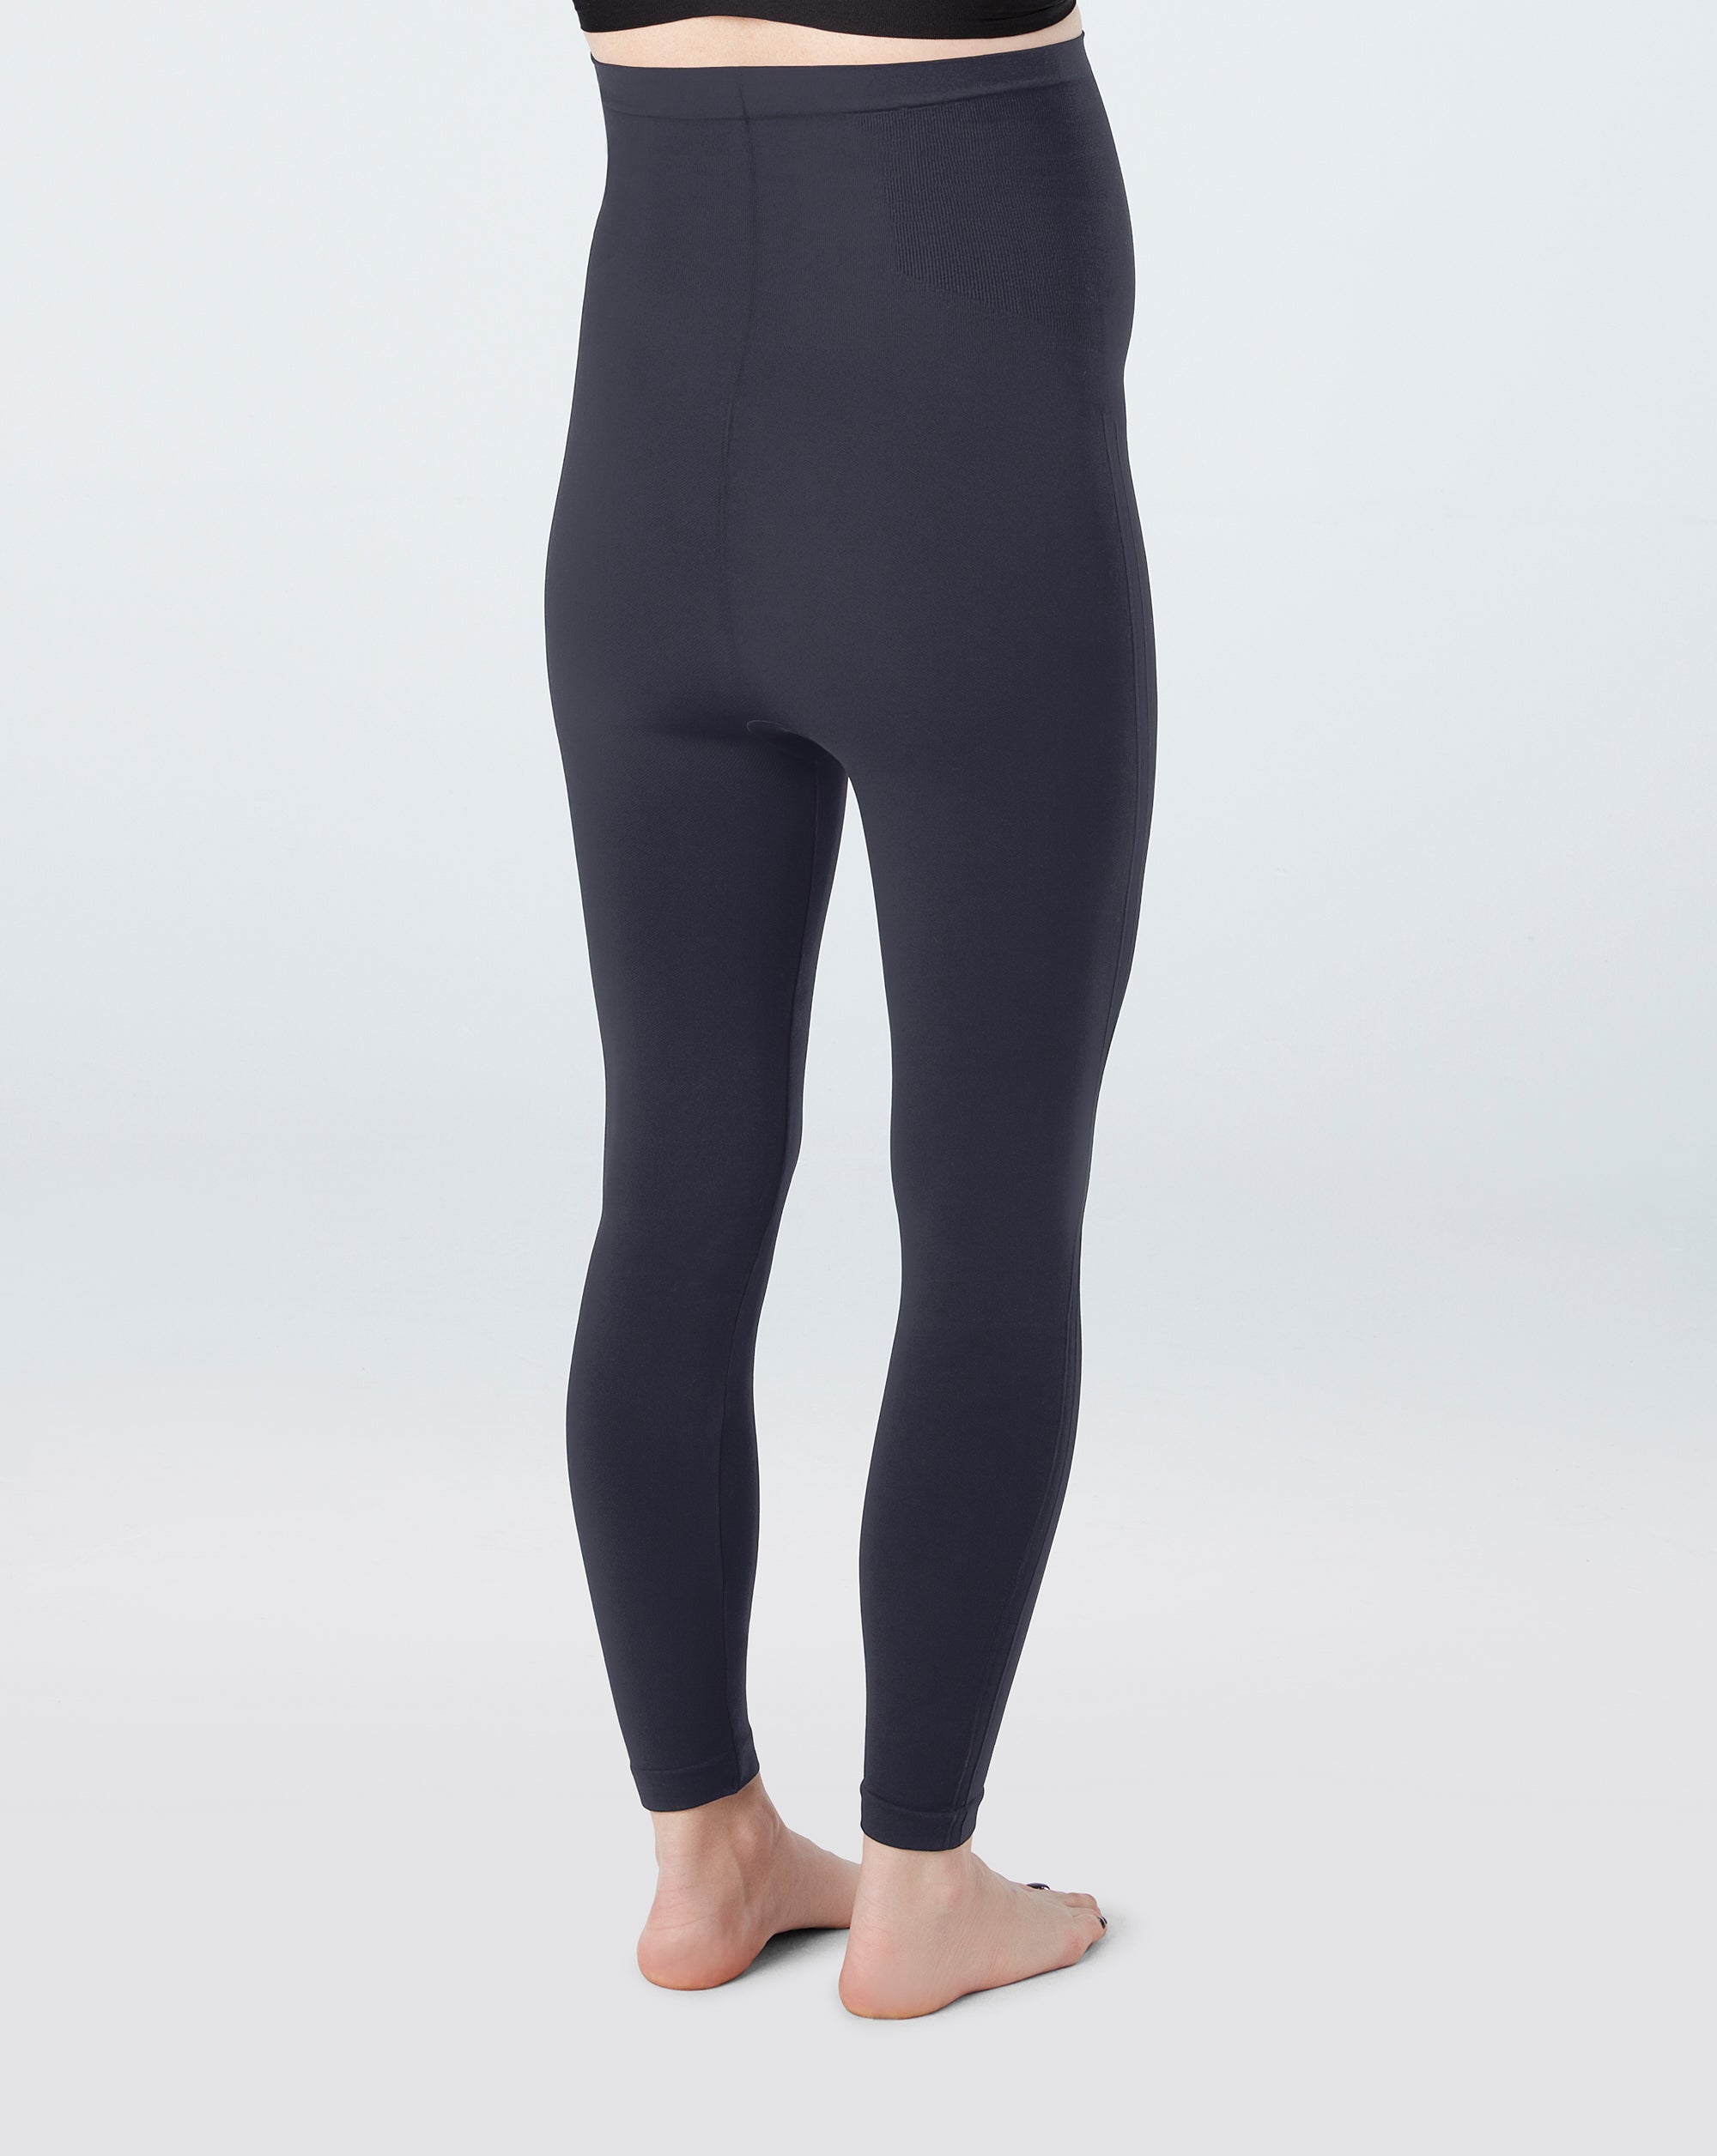 SPANX, Pants & Jumpsuits, Spanx Seamless Comfort Control Leggings Black M